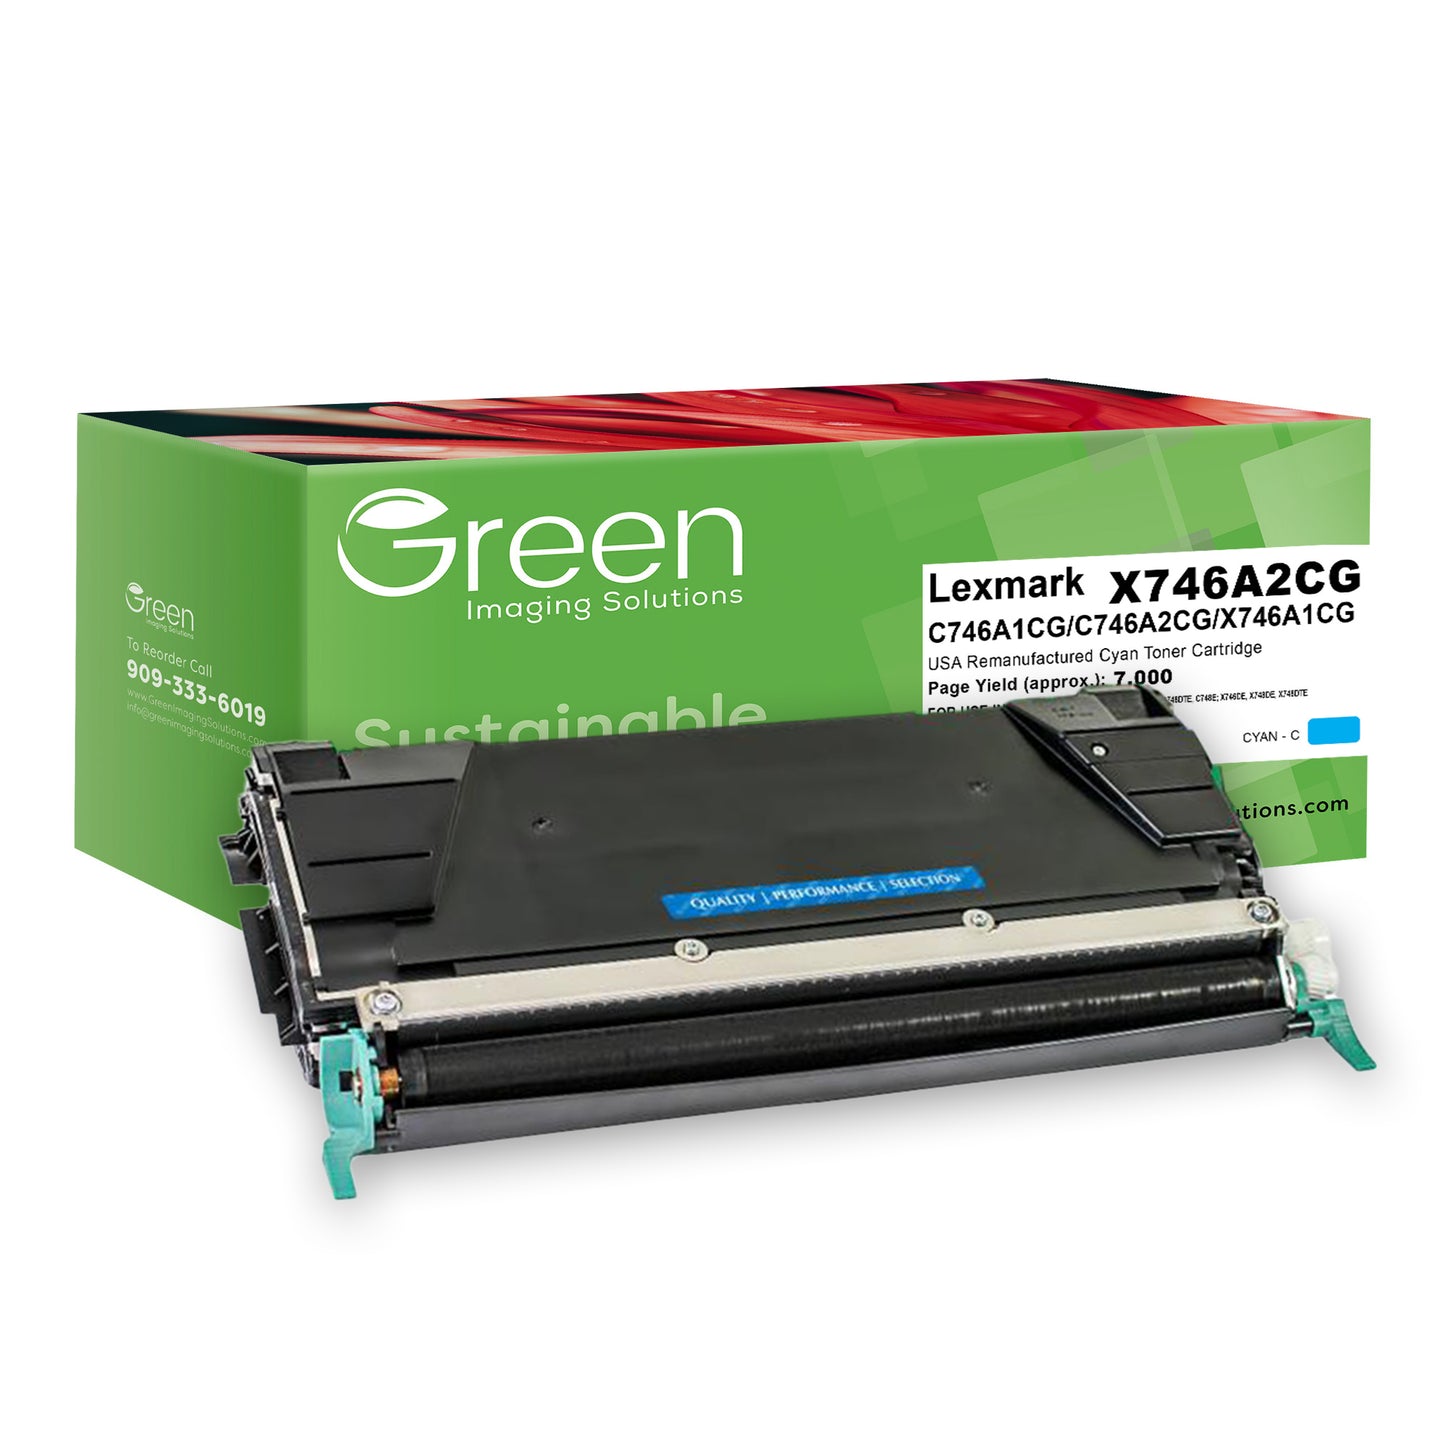 Green Imaging Solutions USA Remanufactured Cyan Toner Cartridge for Lexmark C746/C748